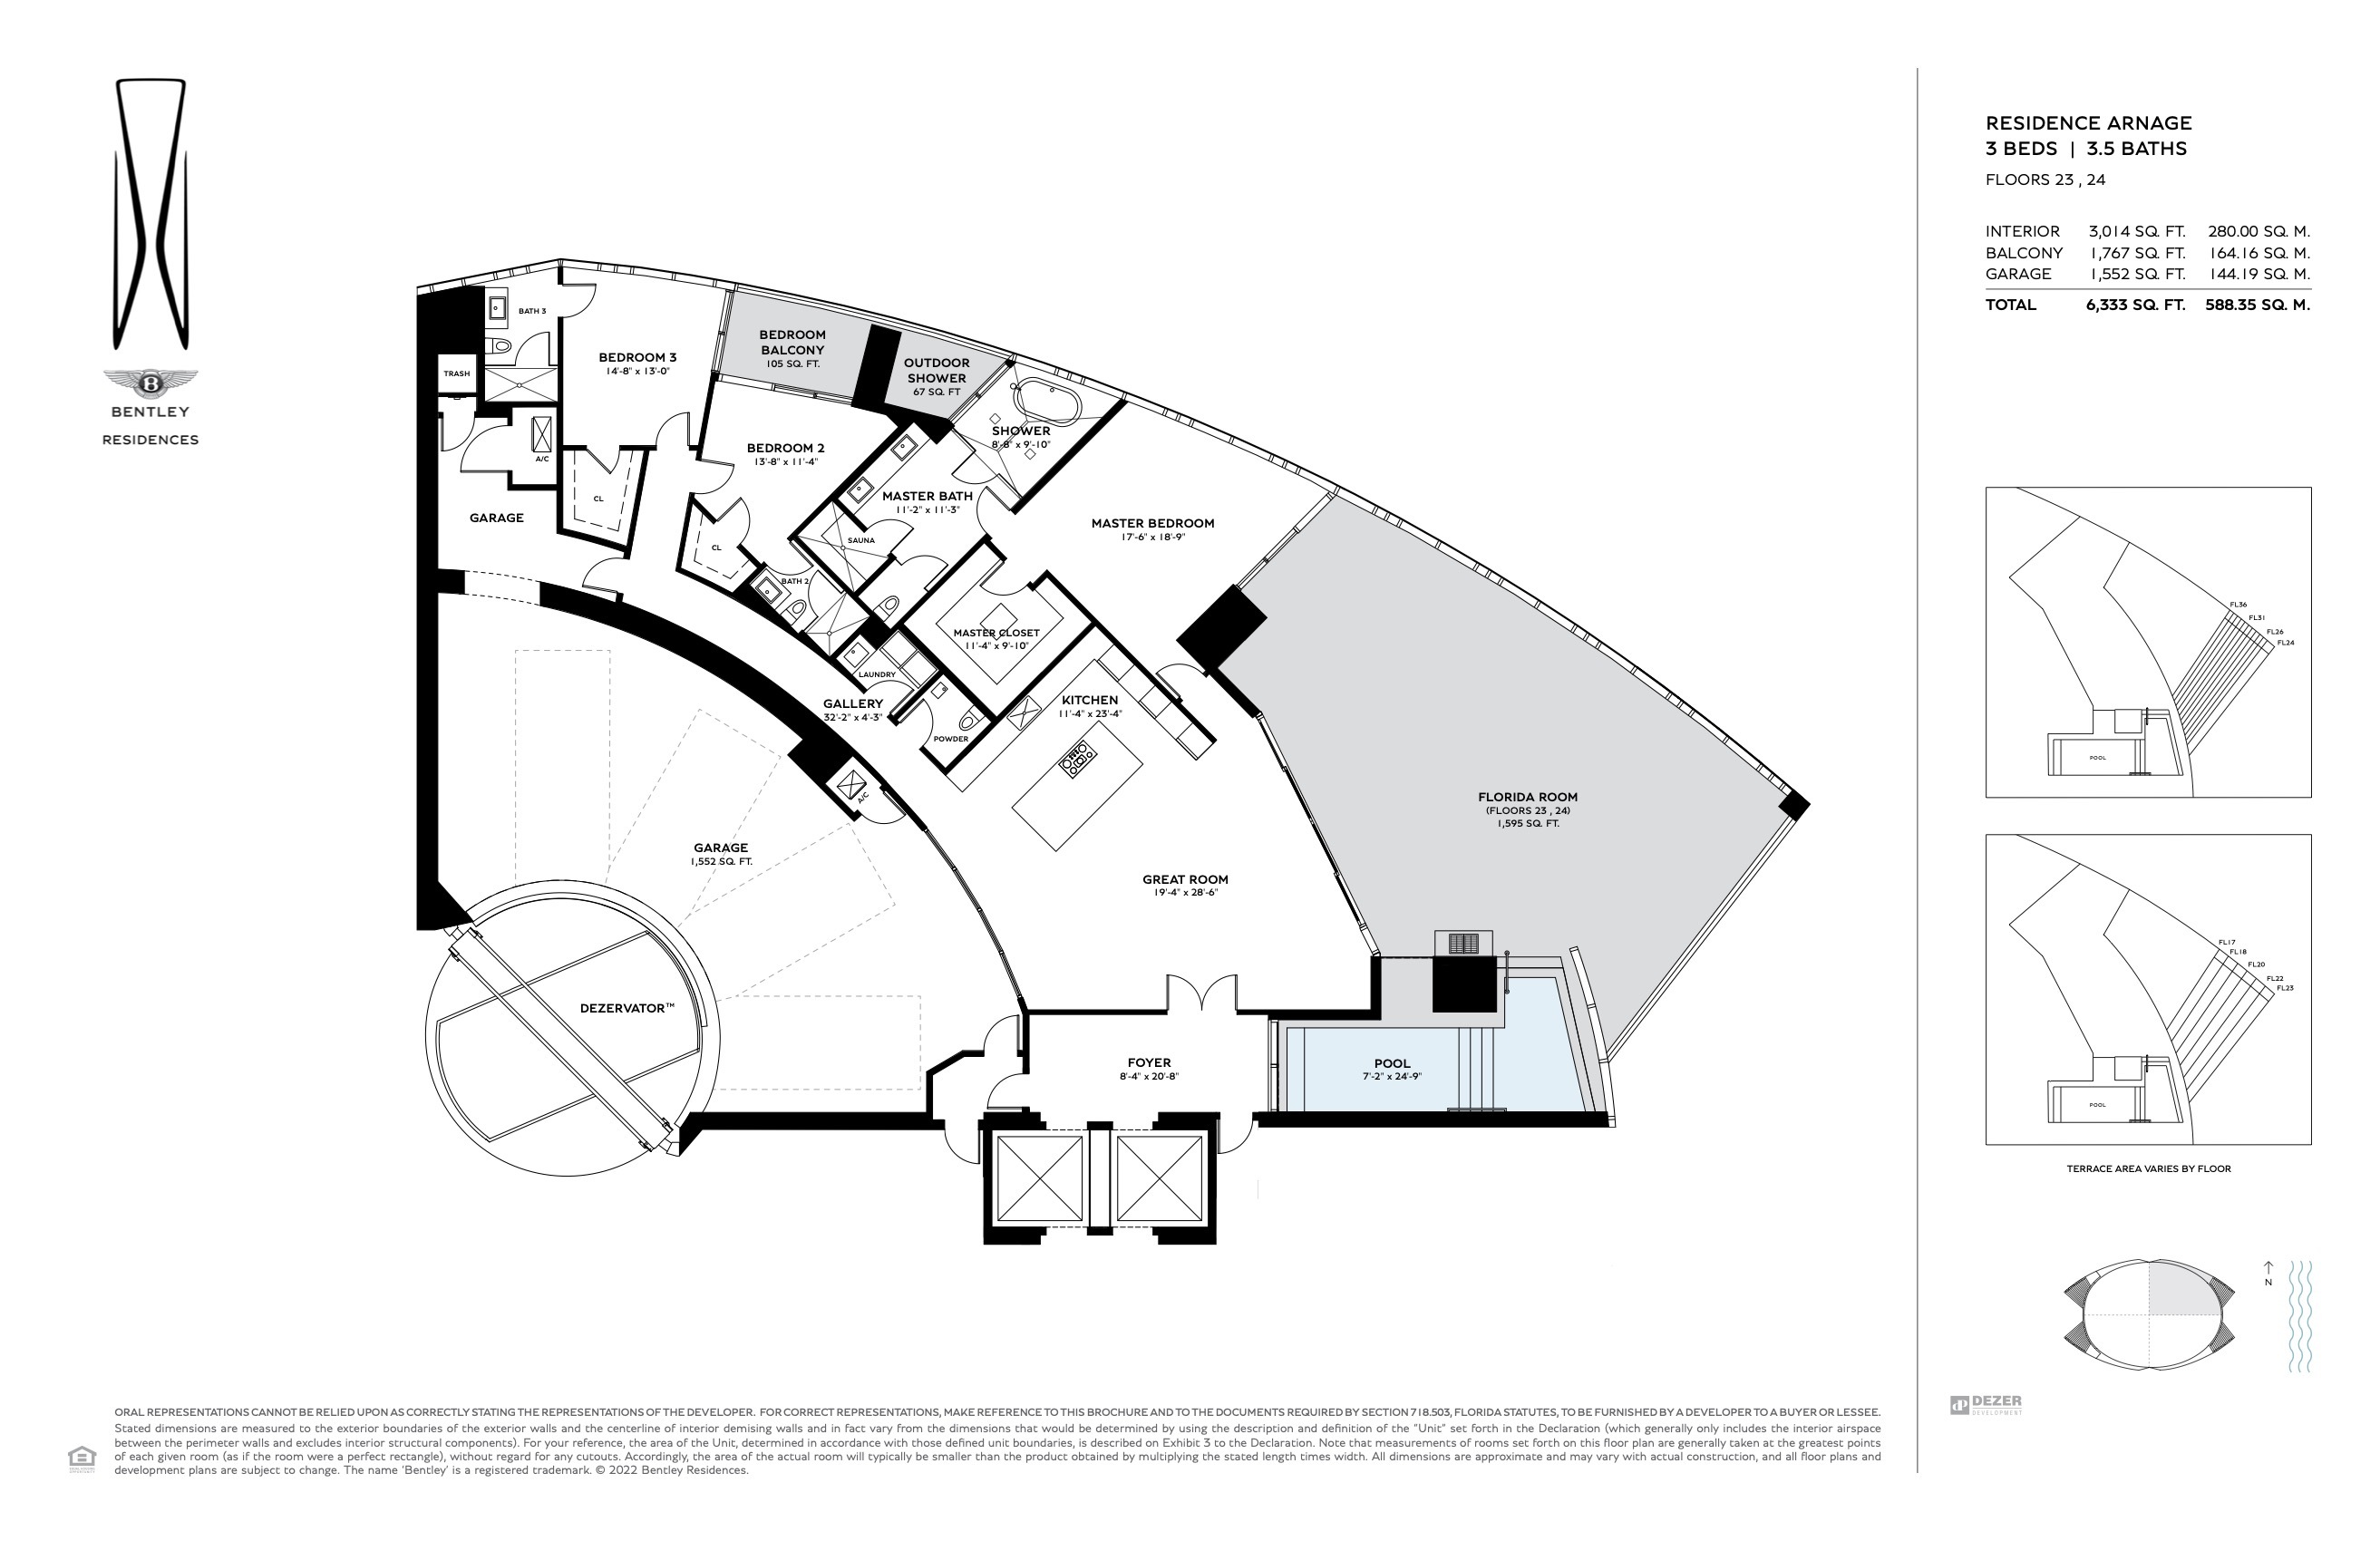 Floor Plan for The Bentley Residences Sunny Isles Floorplans, Residence Arnage FL 23, 24